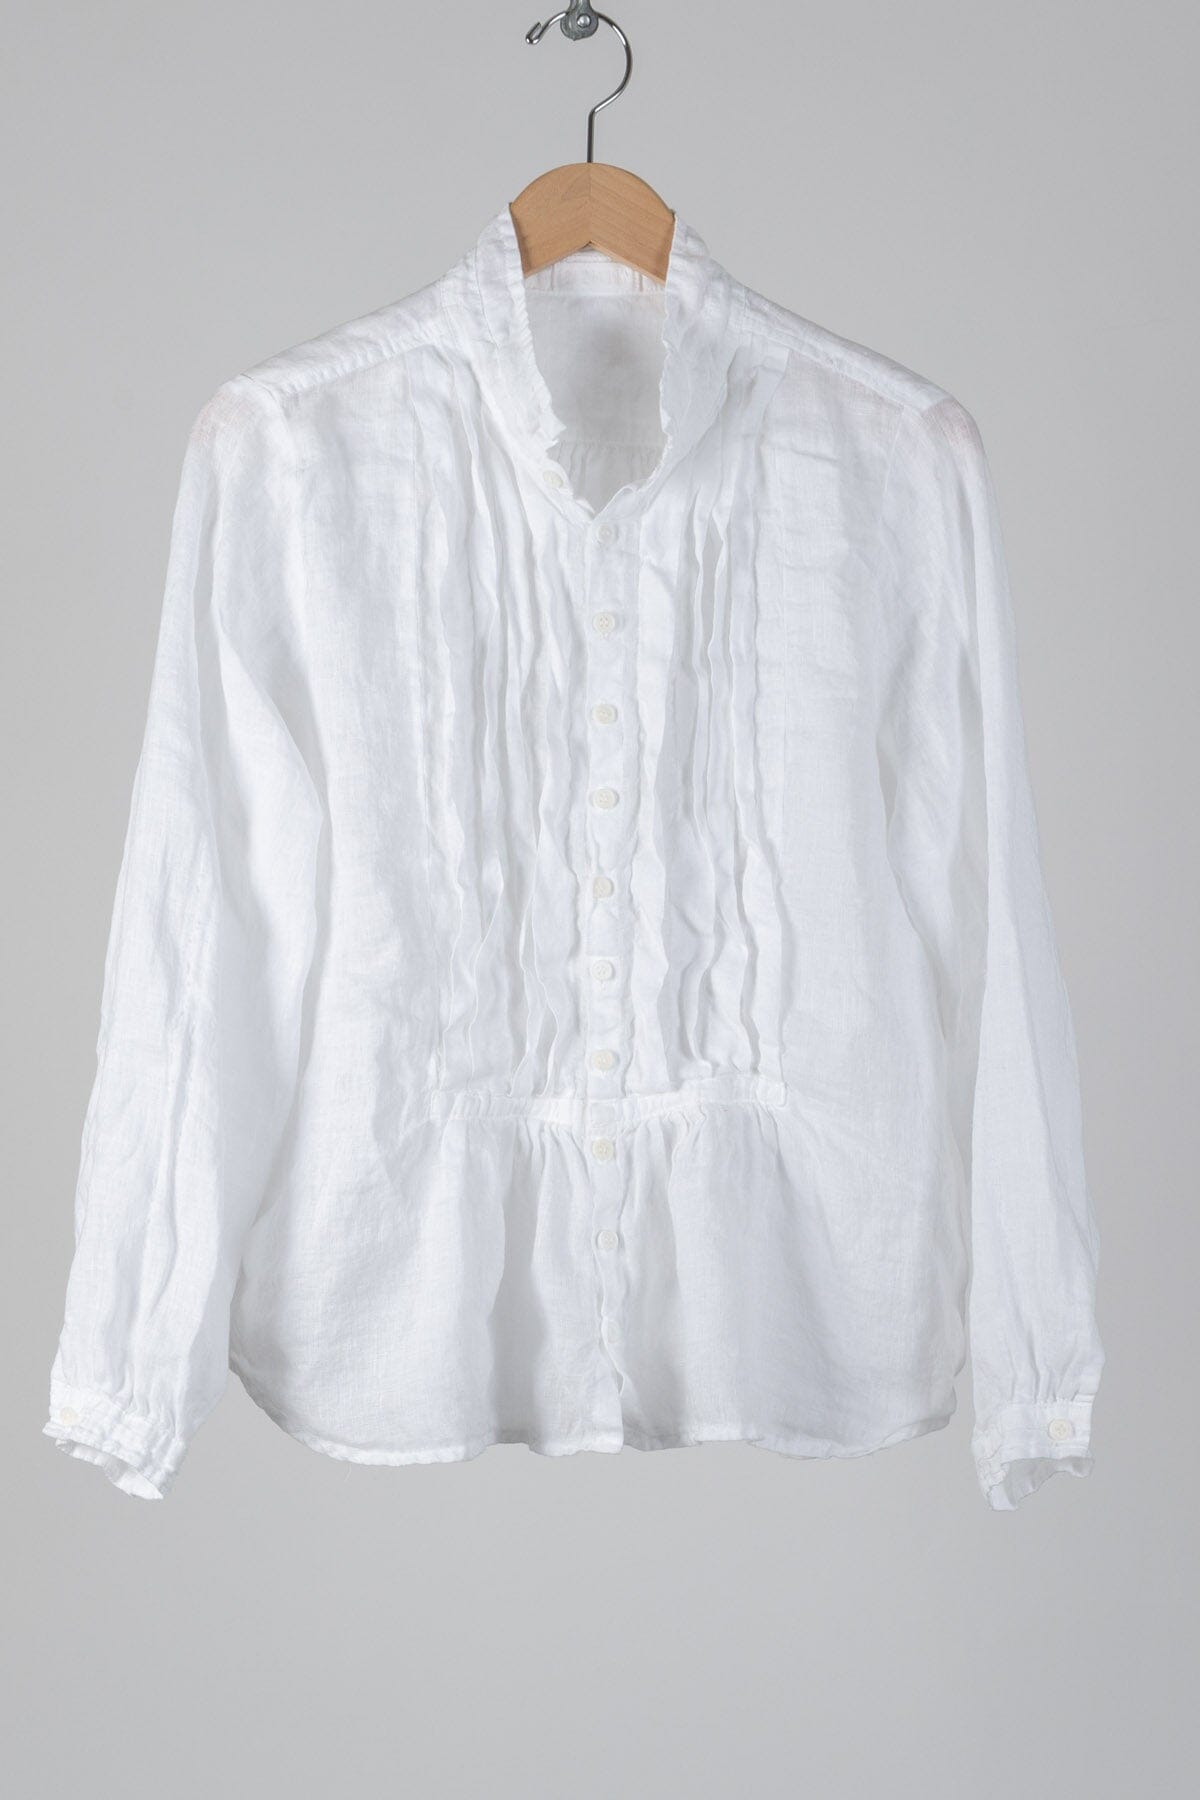 Claudine - Linen S10 - Linen Shirt/Top/Tunic CP Shades 